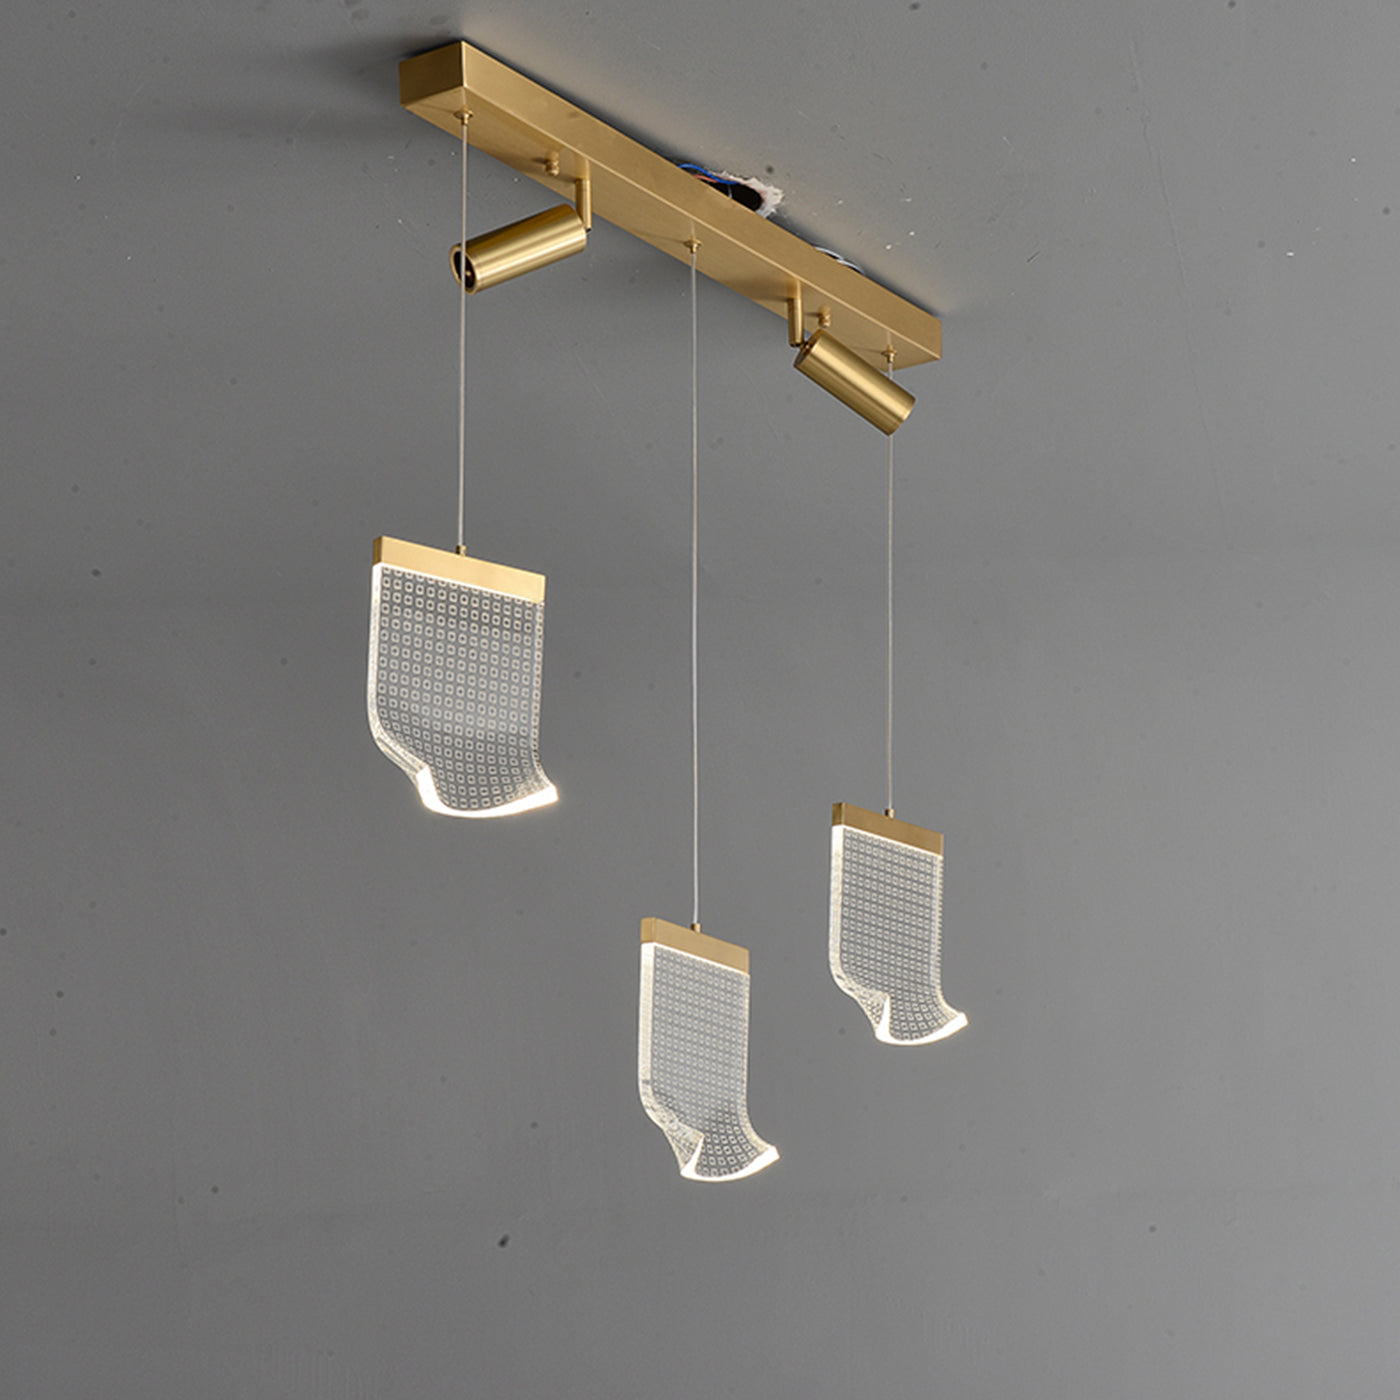 Modern creative rectangle chandelier